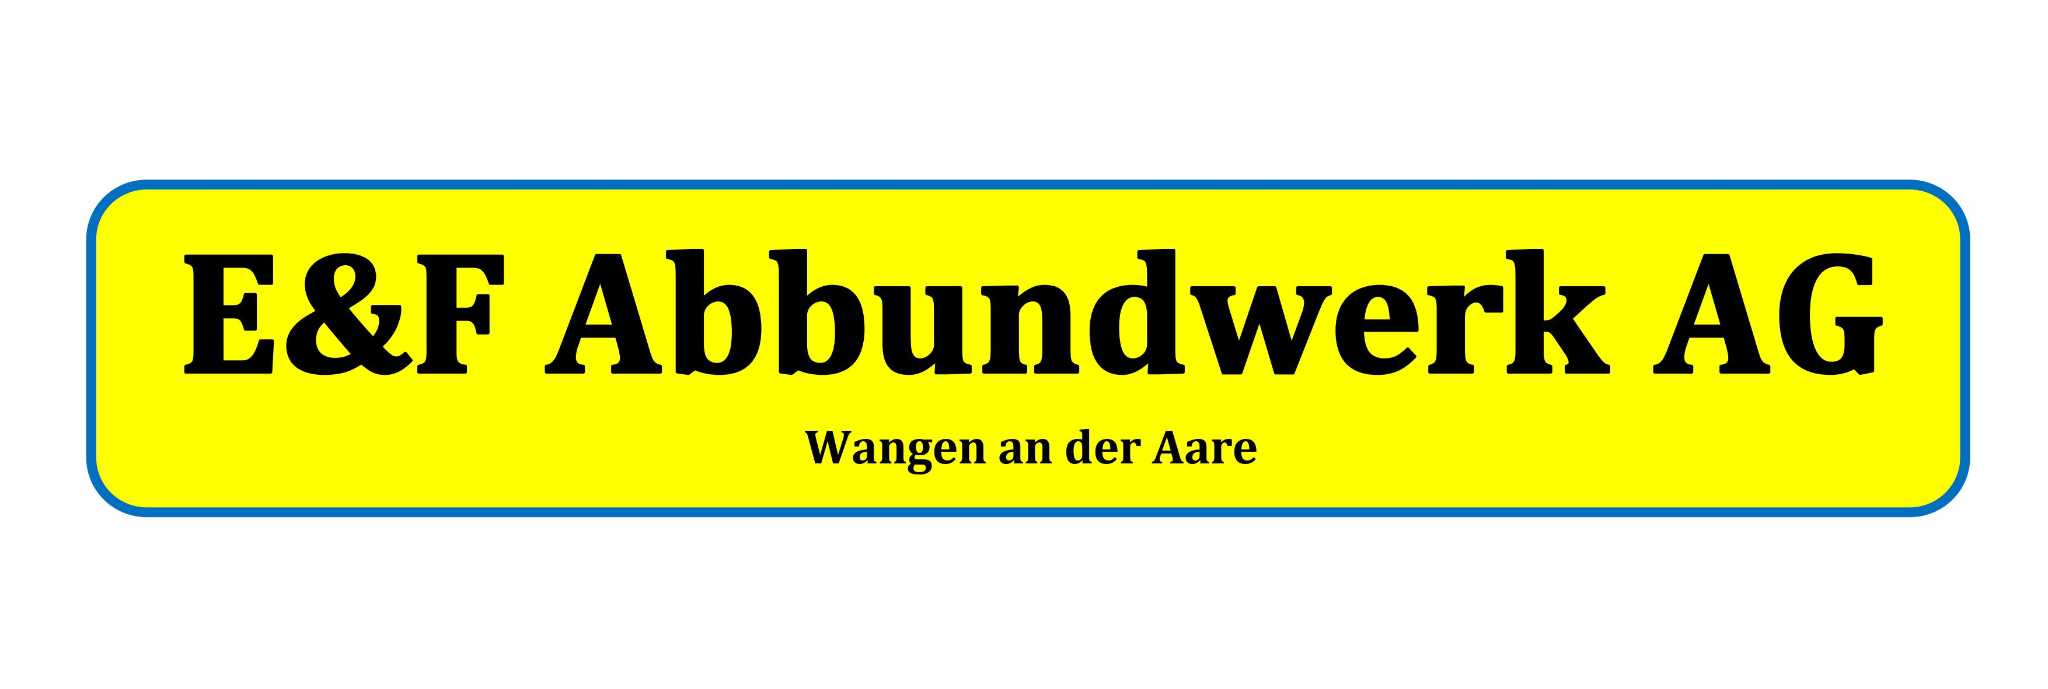 E&F Abbundwerk AG